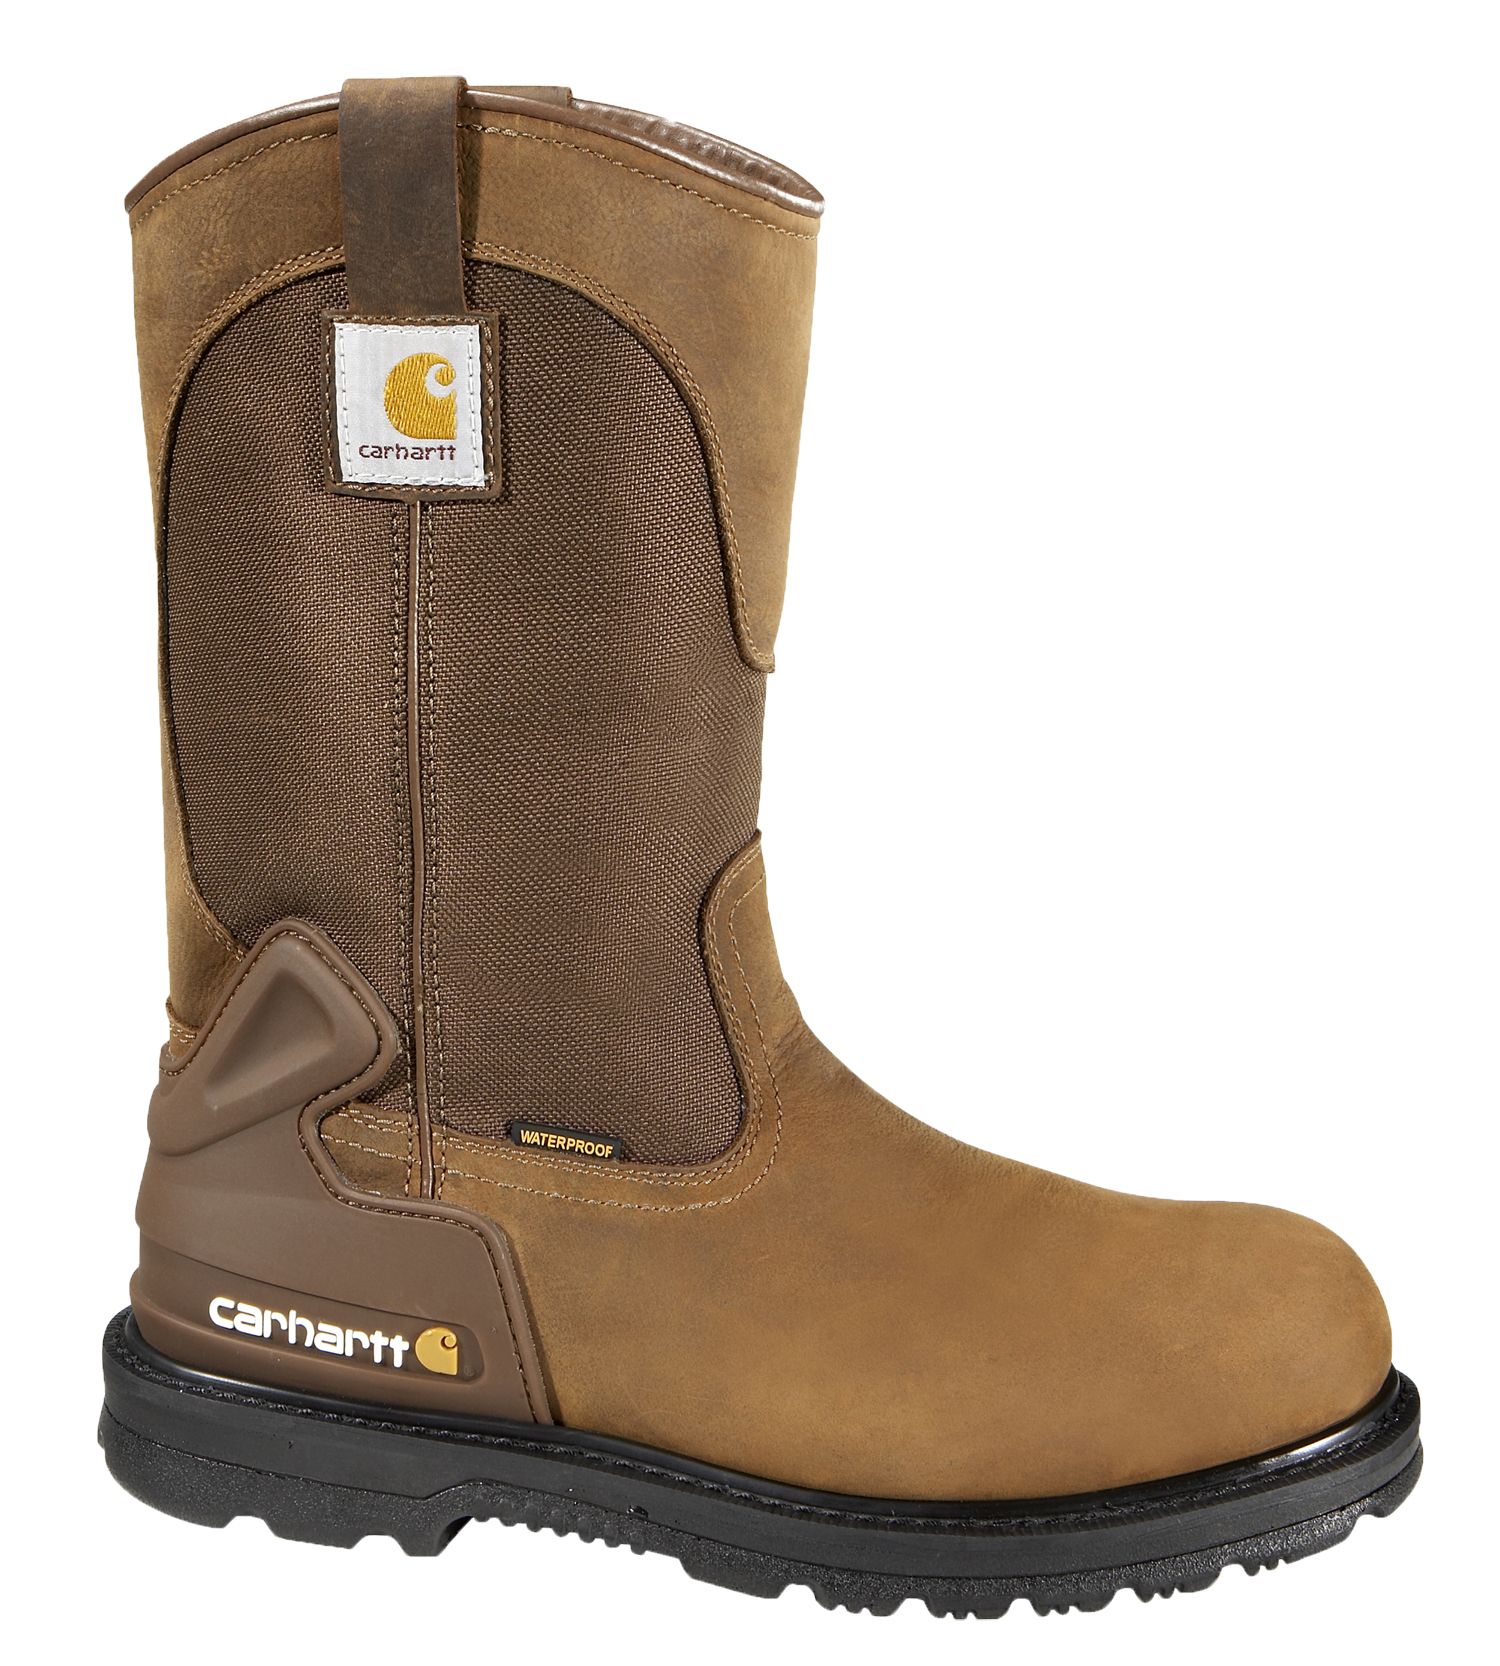 waterproof work boots on sale